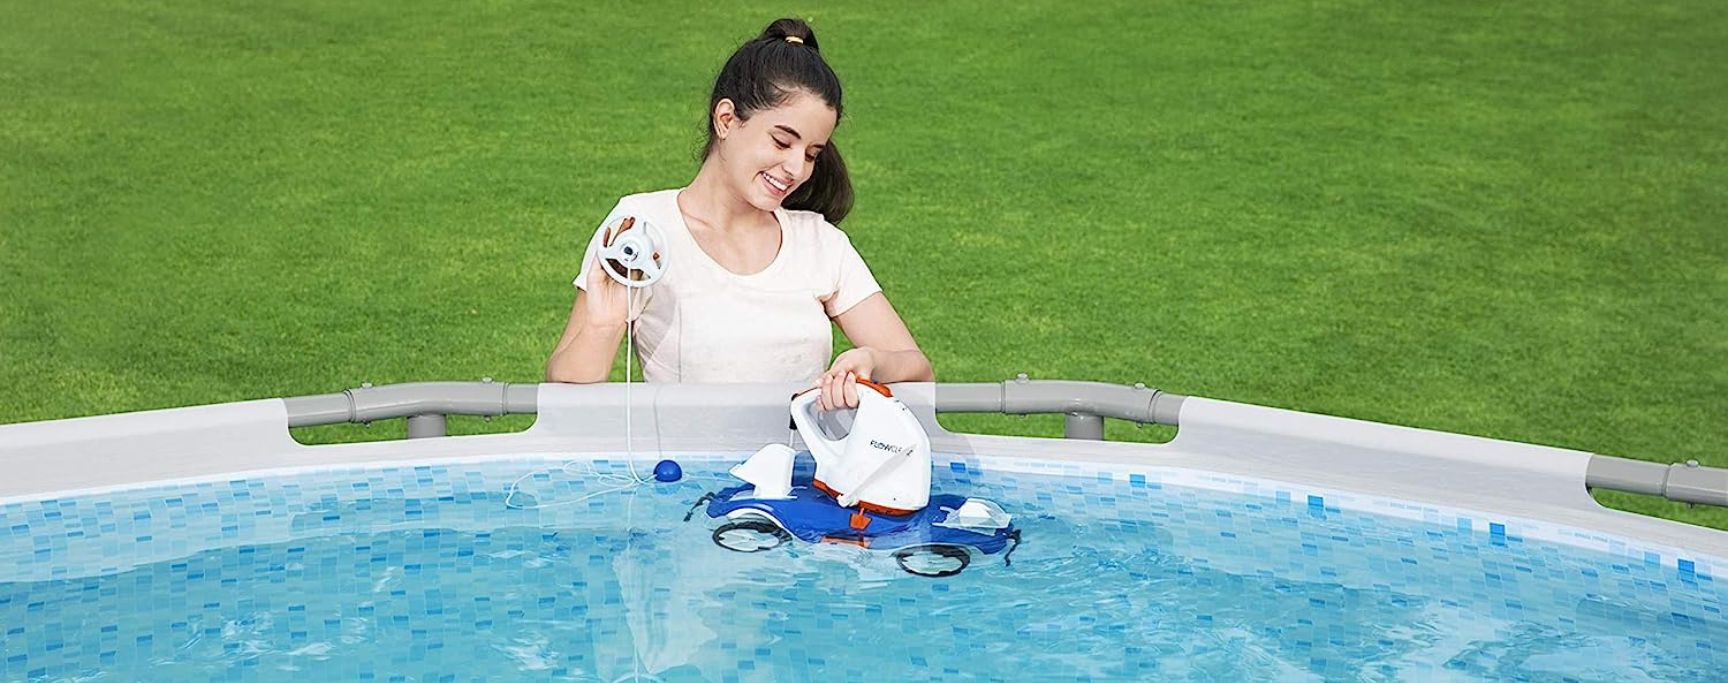 marque de robot nettoyage piscine